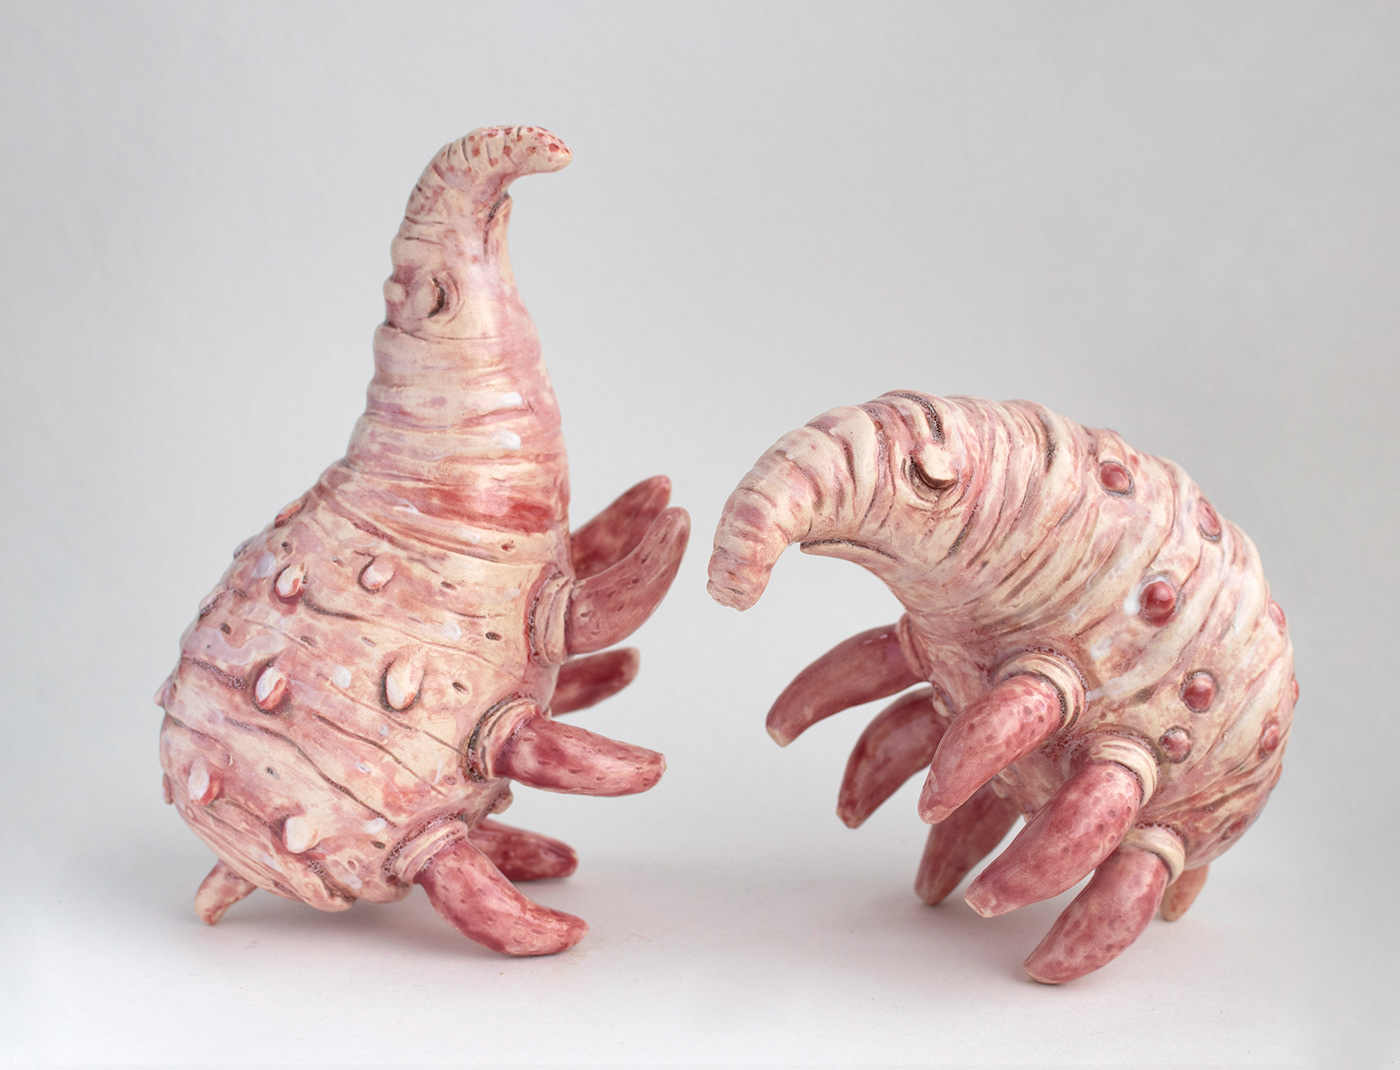 ceramic ceramic art Character creature Disgusting fantasy flea handmade Insects sculpture